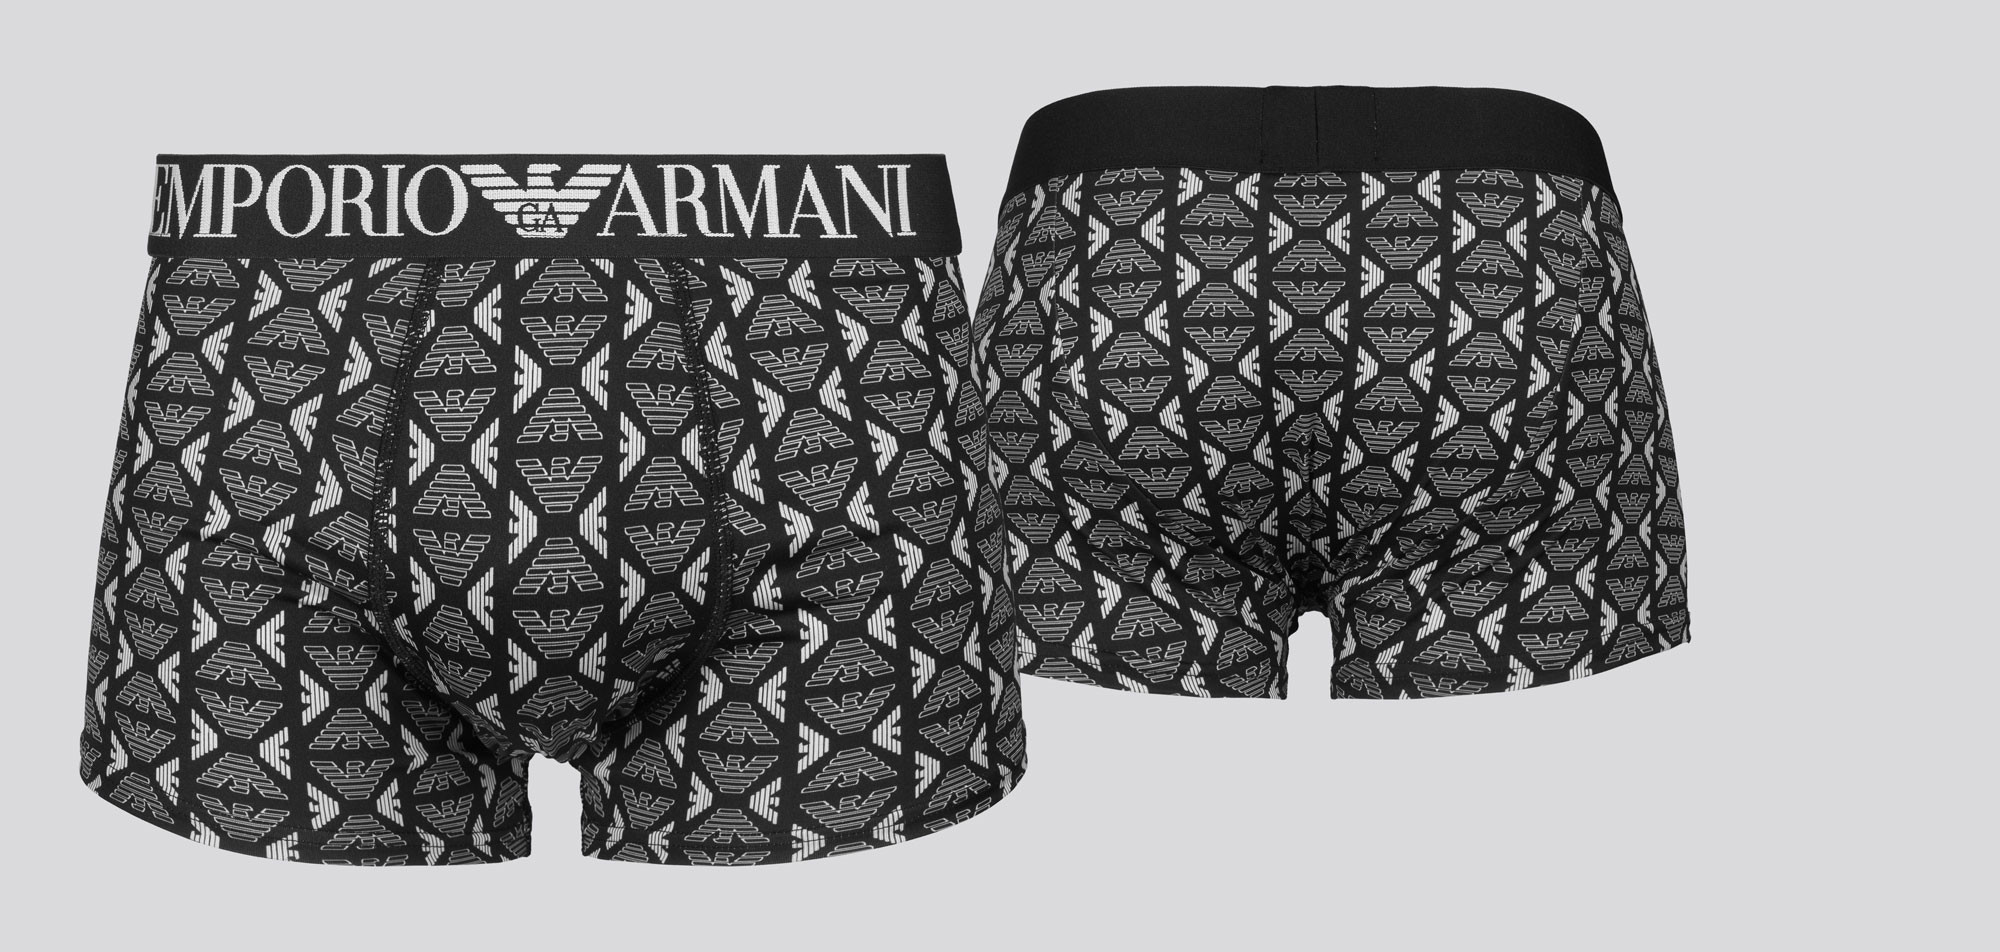 Emporio Armani Trunk Microfiber 3R535 Recycled Fabric, color Nee